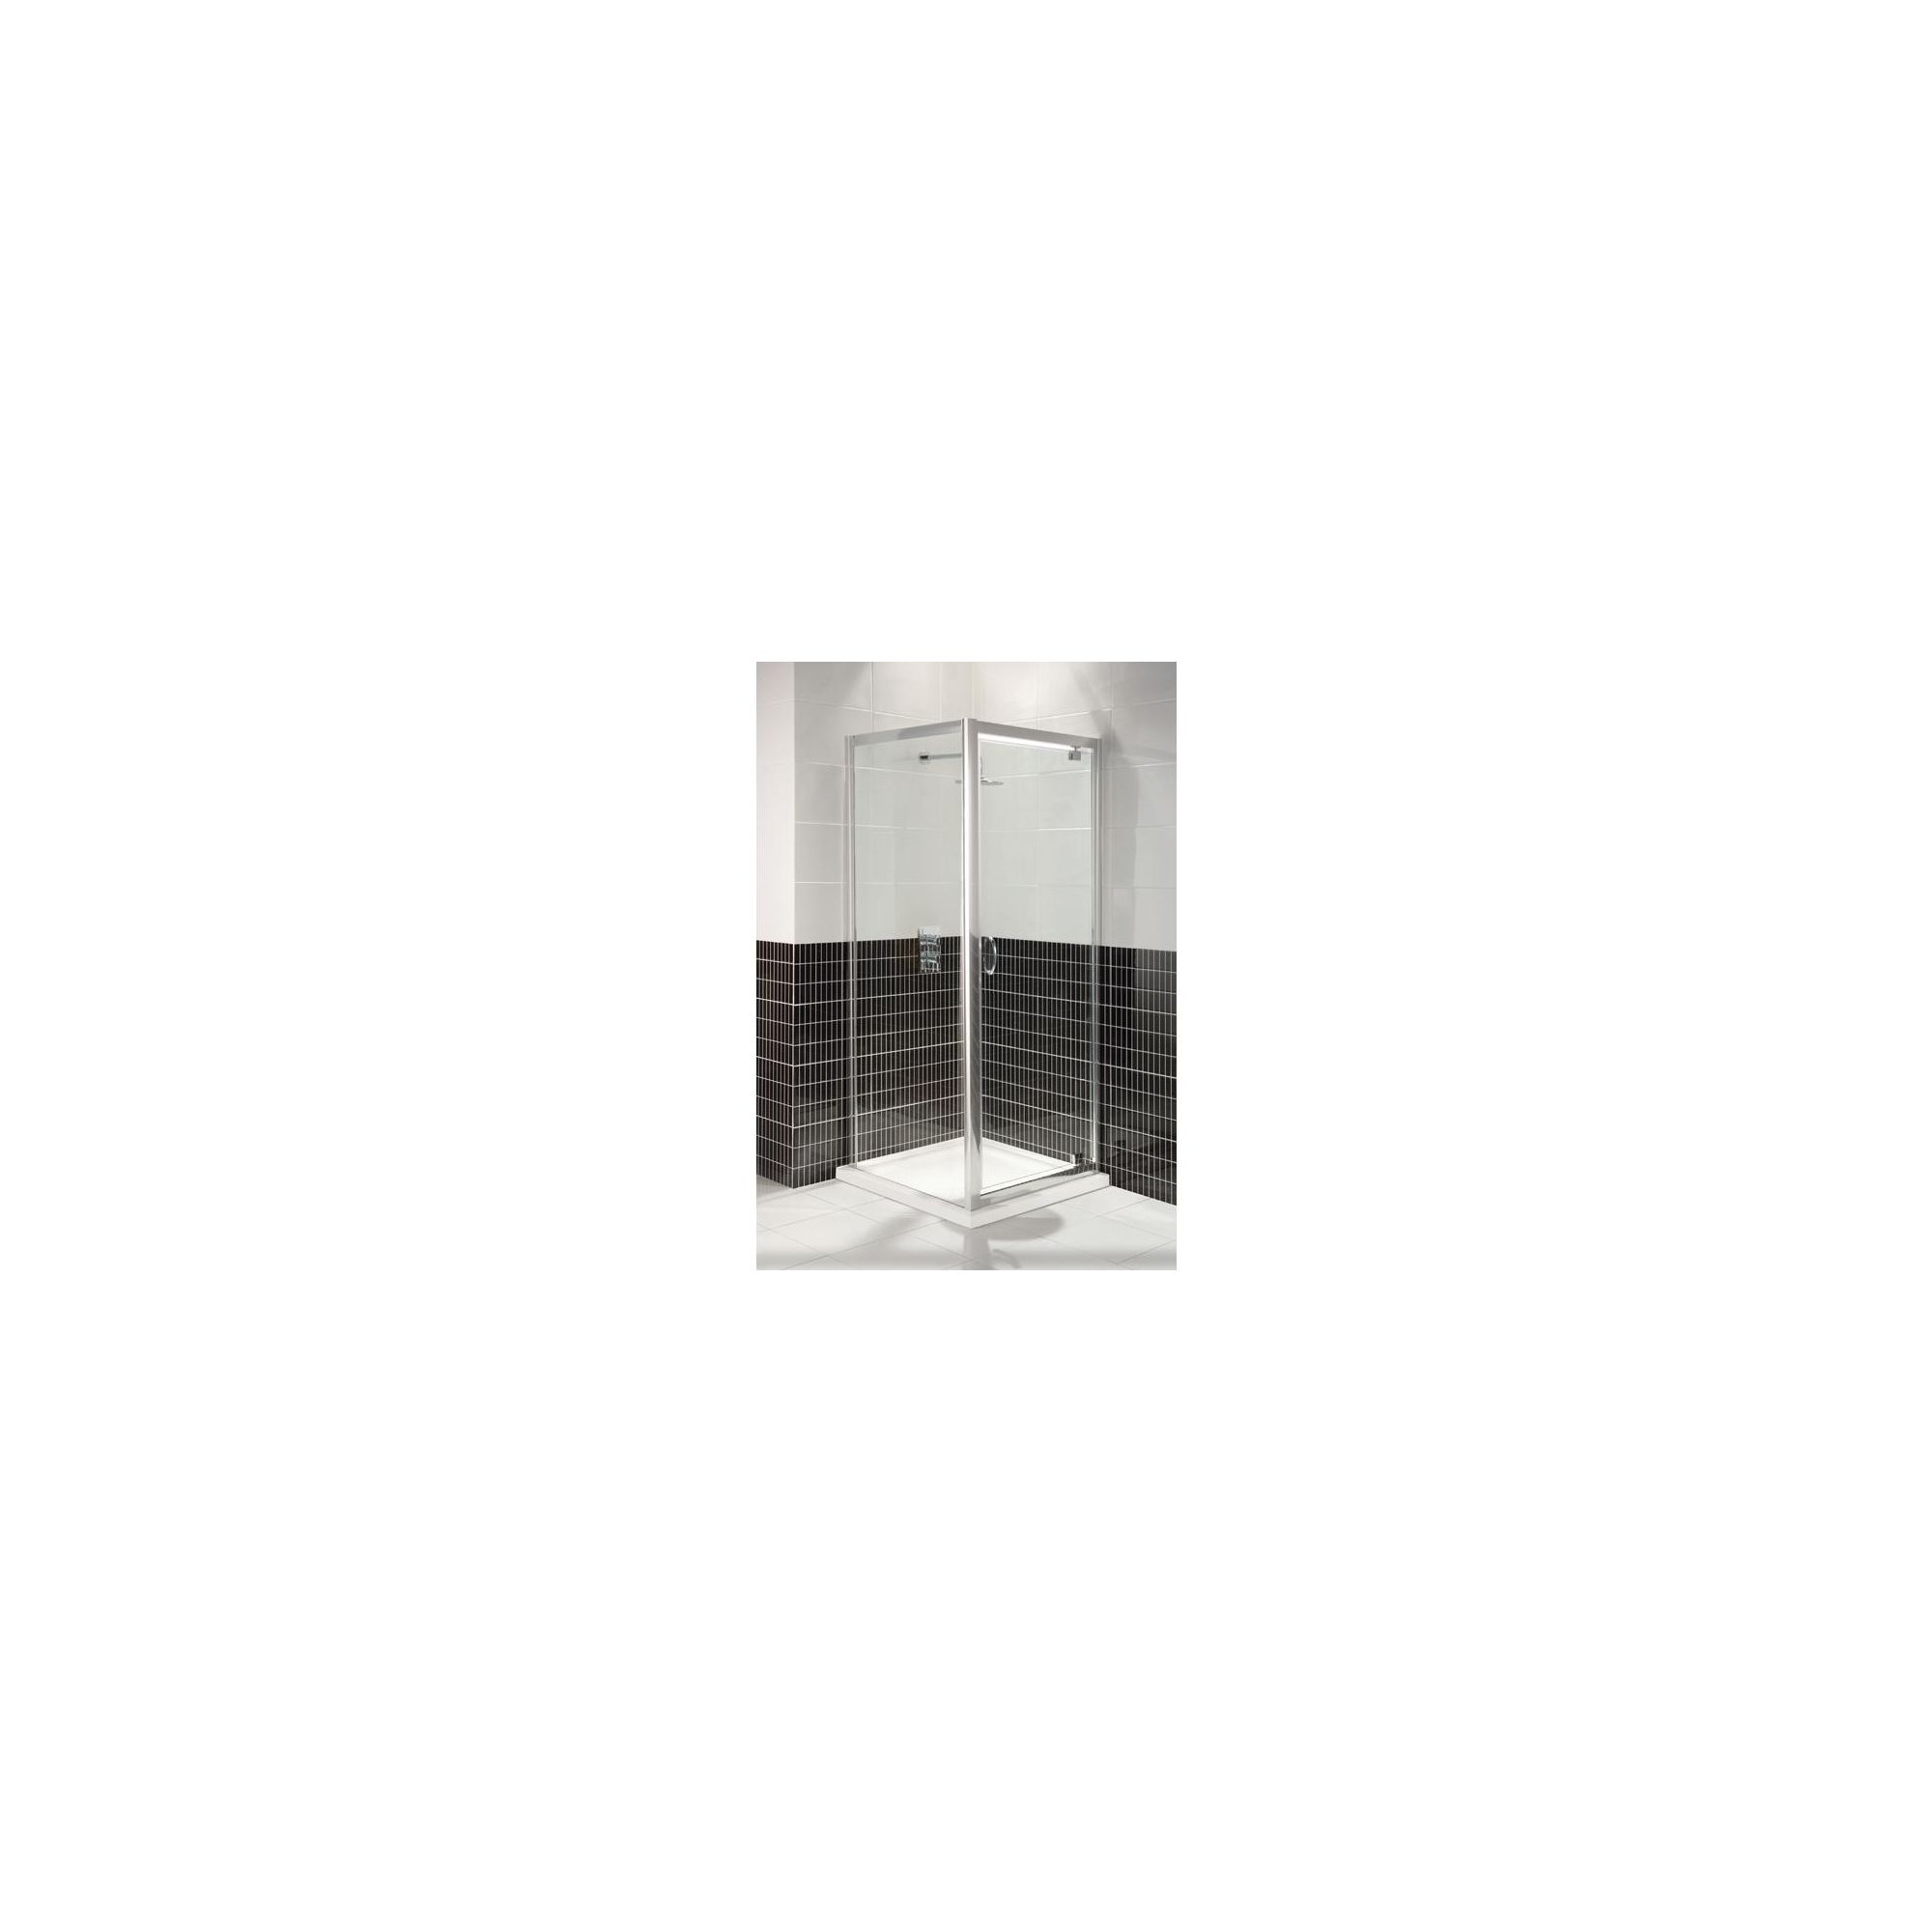 Balterley Framed Pivot Shower Enclosure, 760mm x 760mm, Standard Tray, 6mm Glass at Tesco Direct